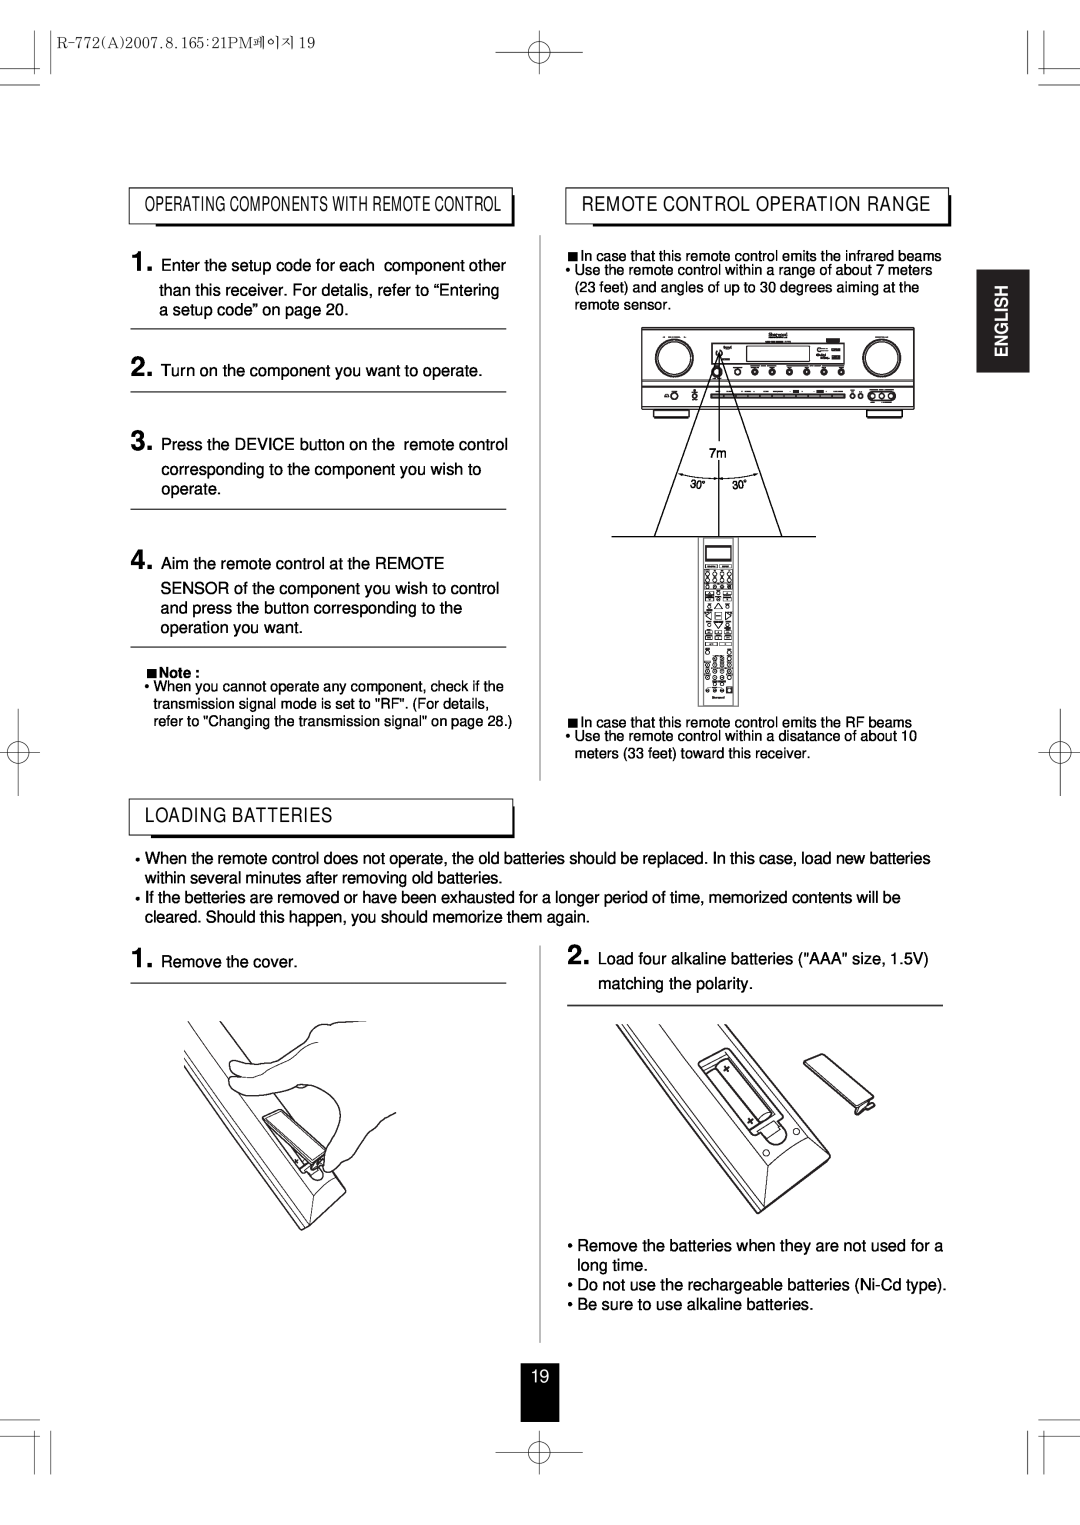 Sherwood R-772 manual Loading Batteries, Remote Control Operation Range, English 